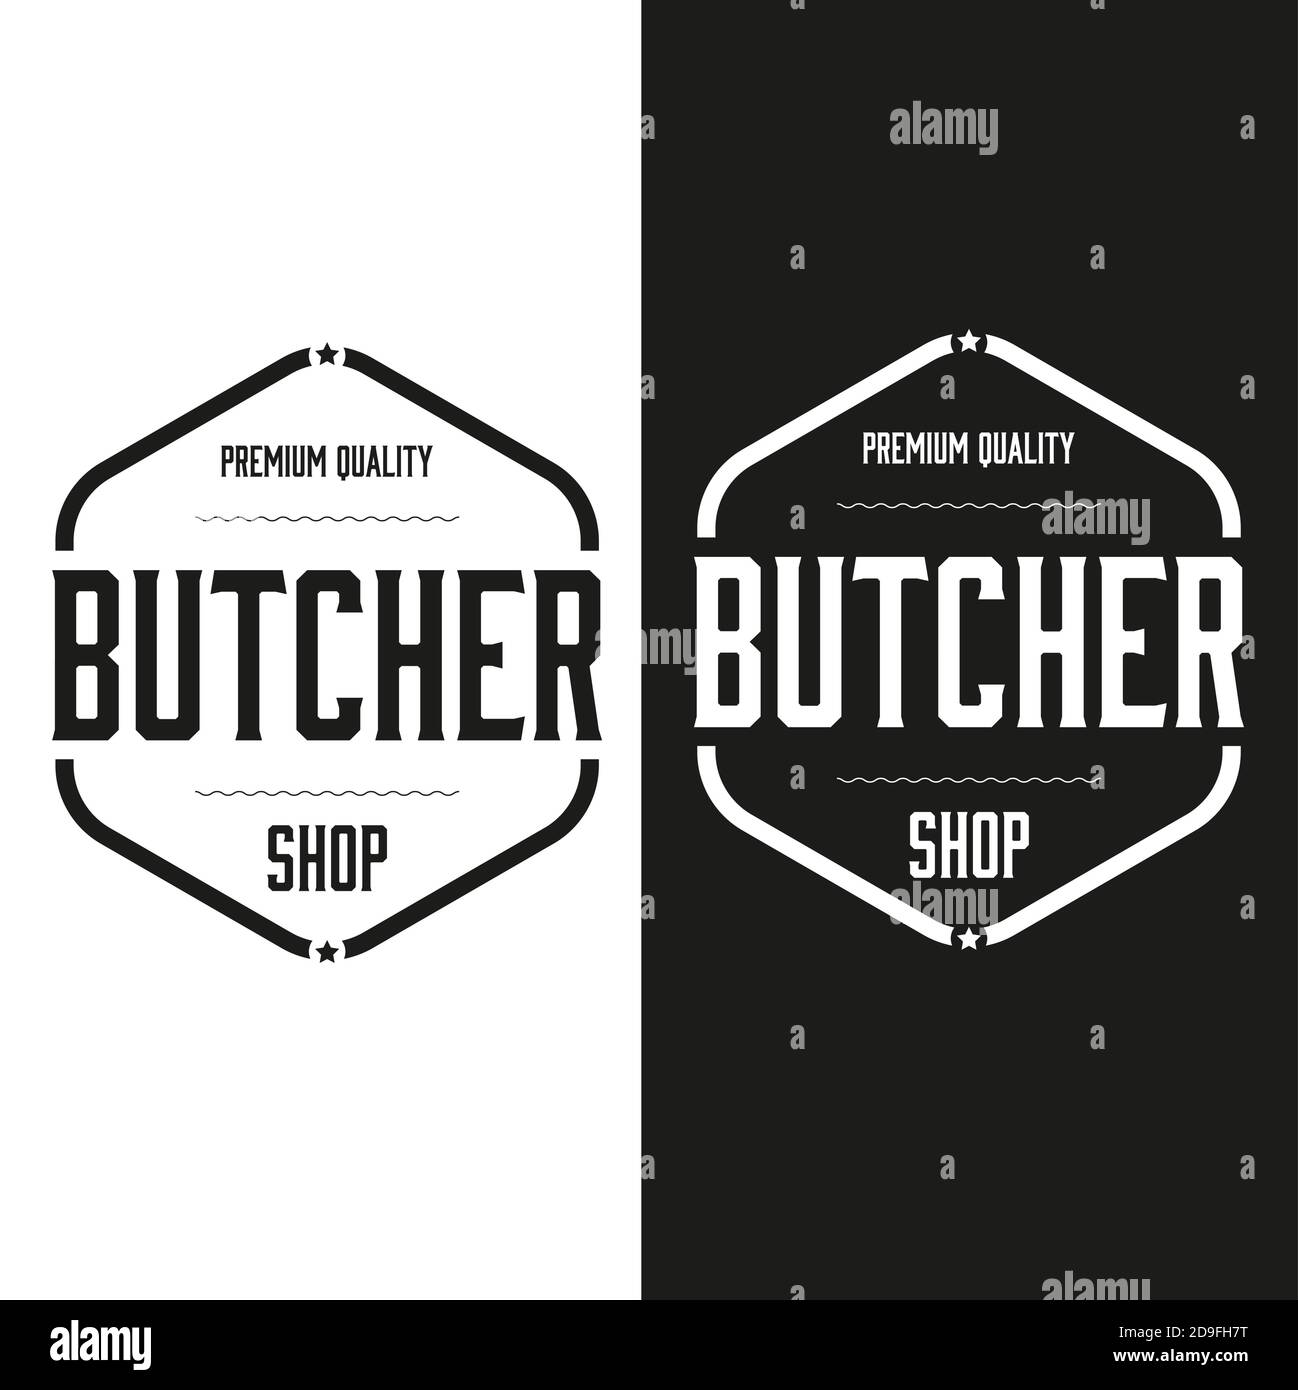 Premium quality Butcher Shop logo Stock Vector